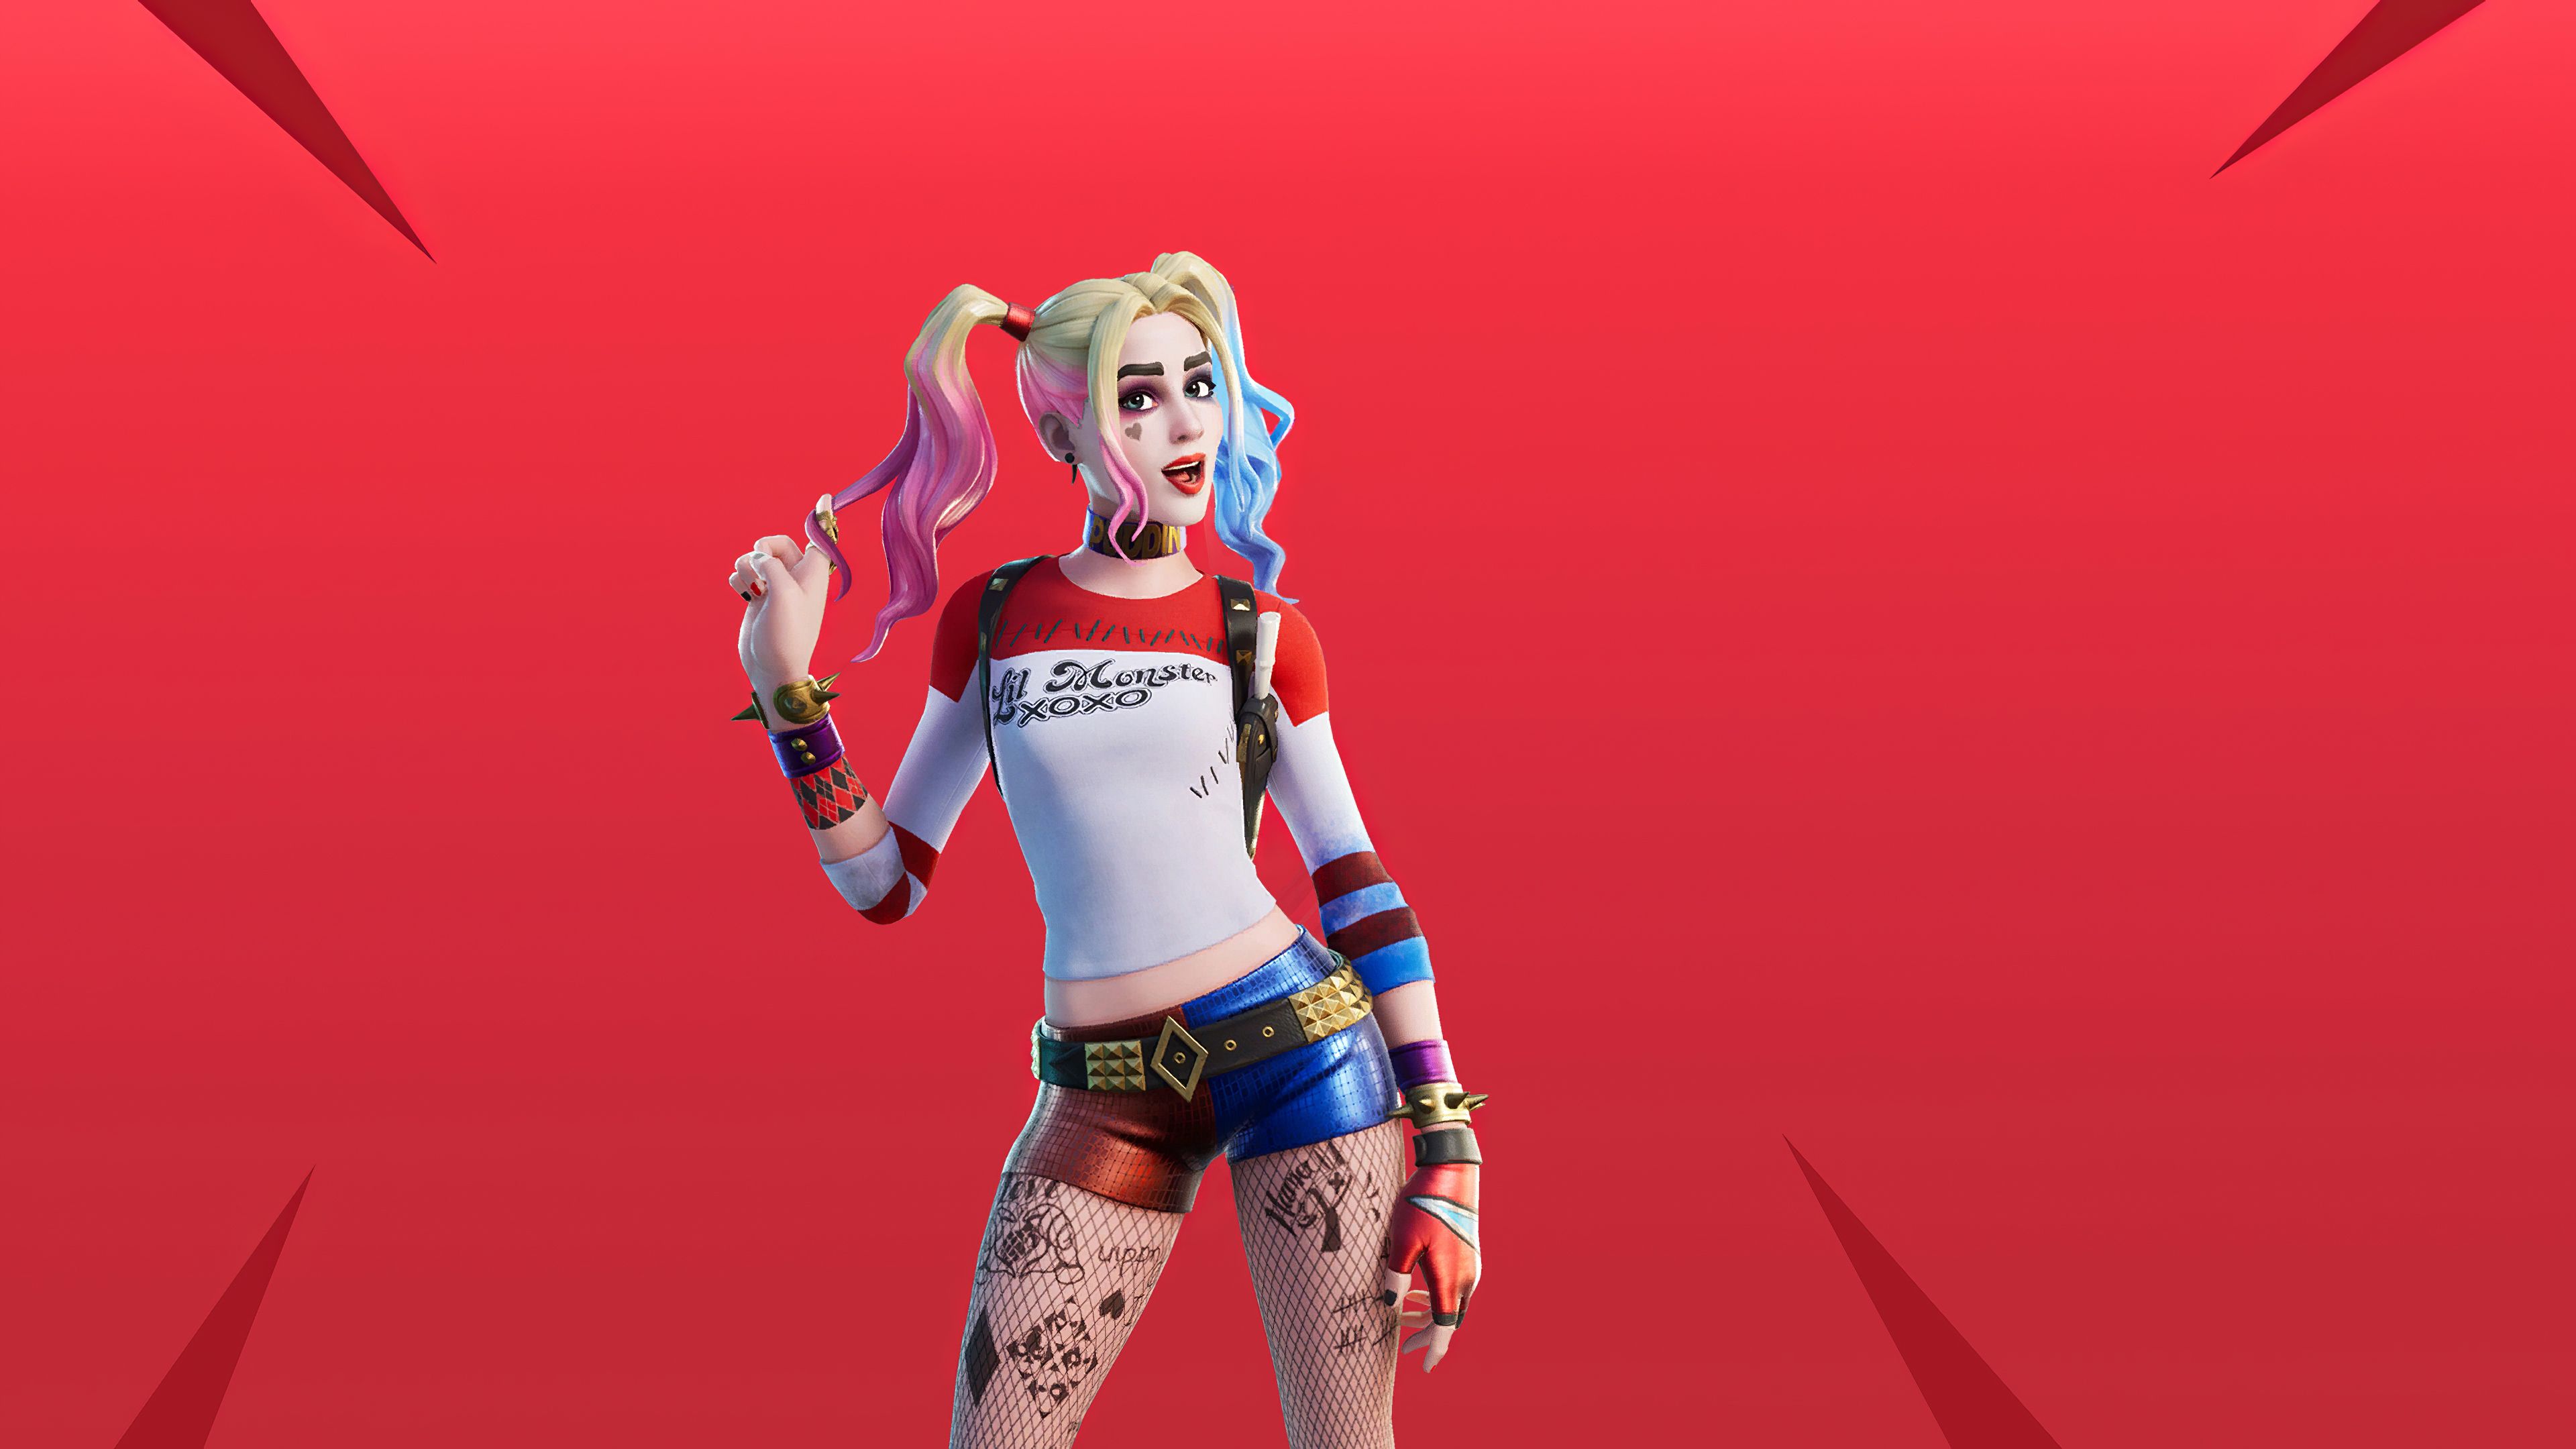 Fortnite Harley Quinn HD Games, 4k Wallpaper, Image